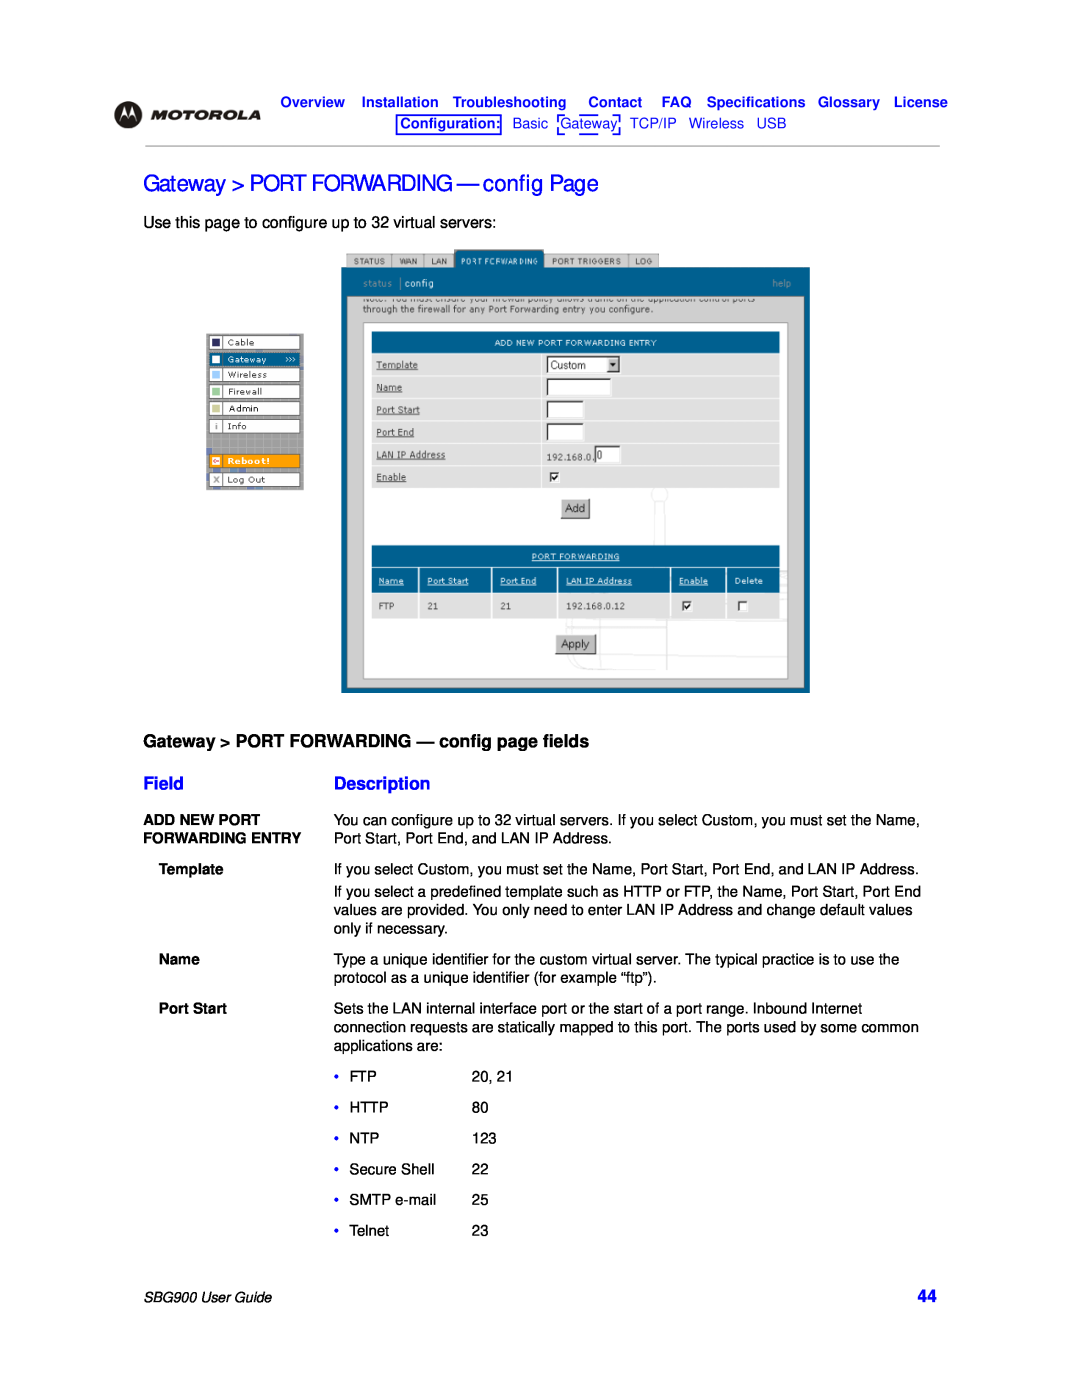 Motorola SBG900 Gateway PORT FORWARDING - config Page, Gateway PORT FORWARDING - config page fields, Field, Description 